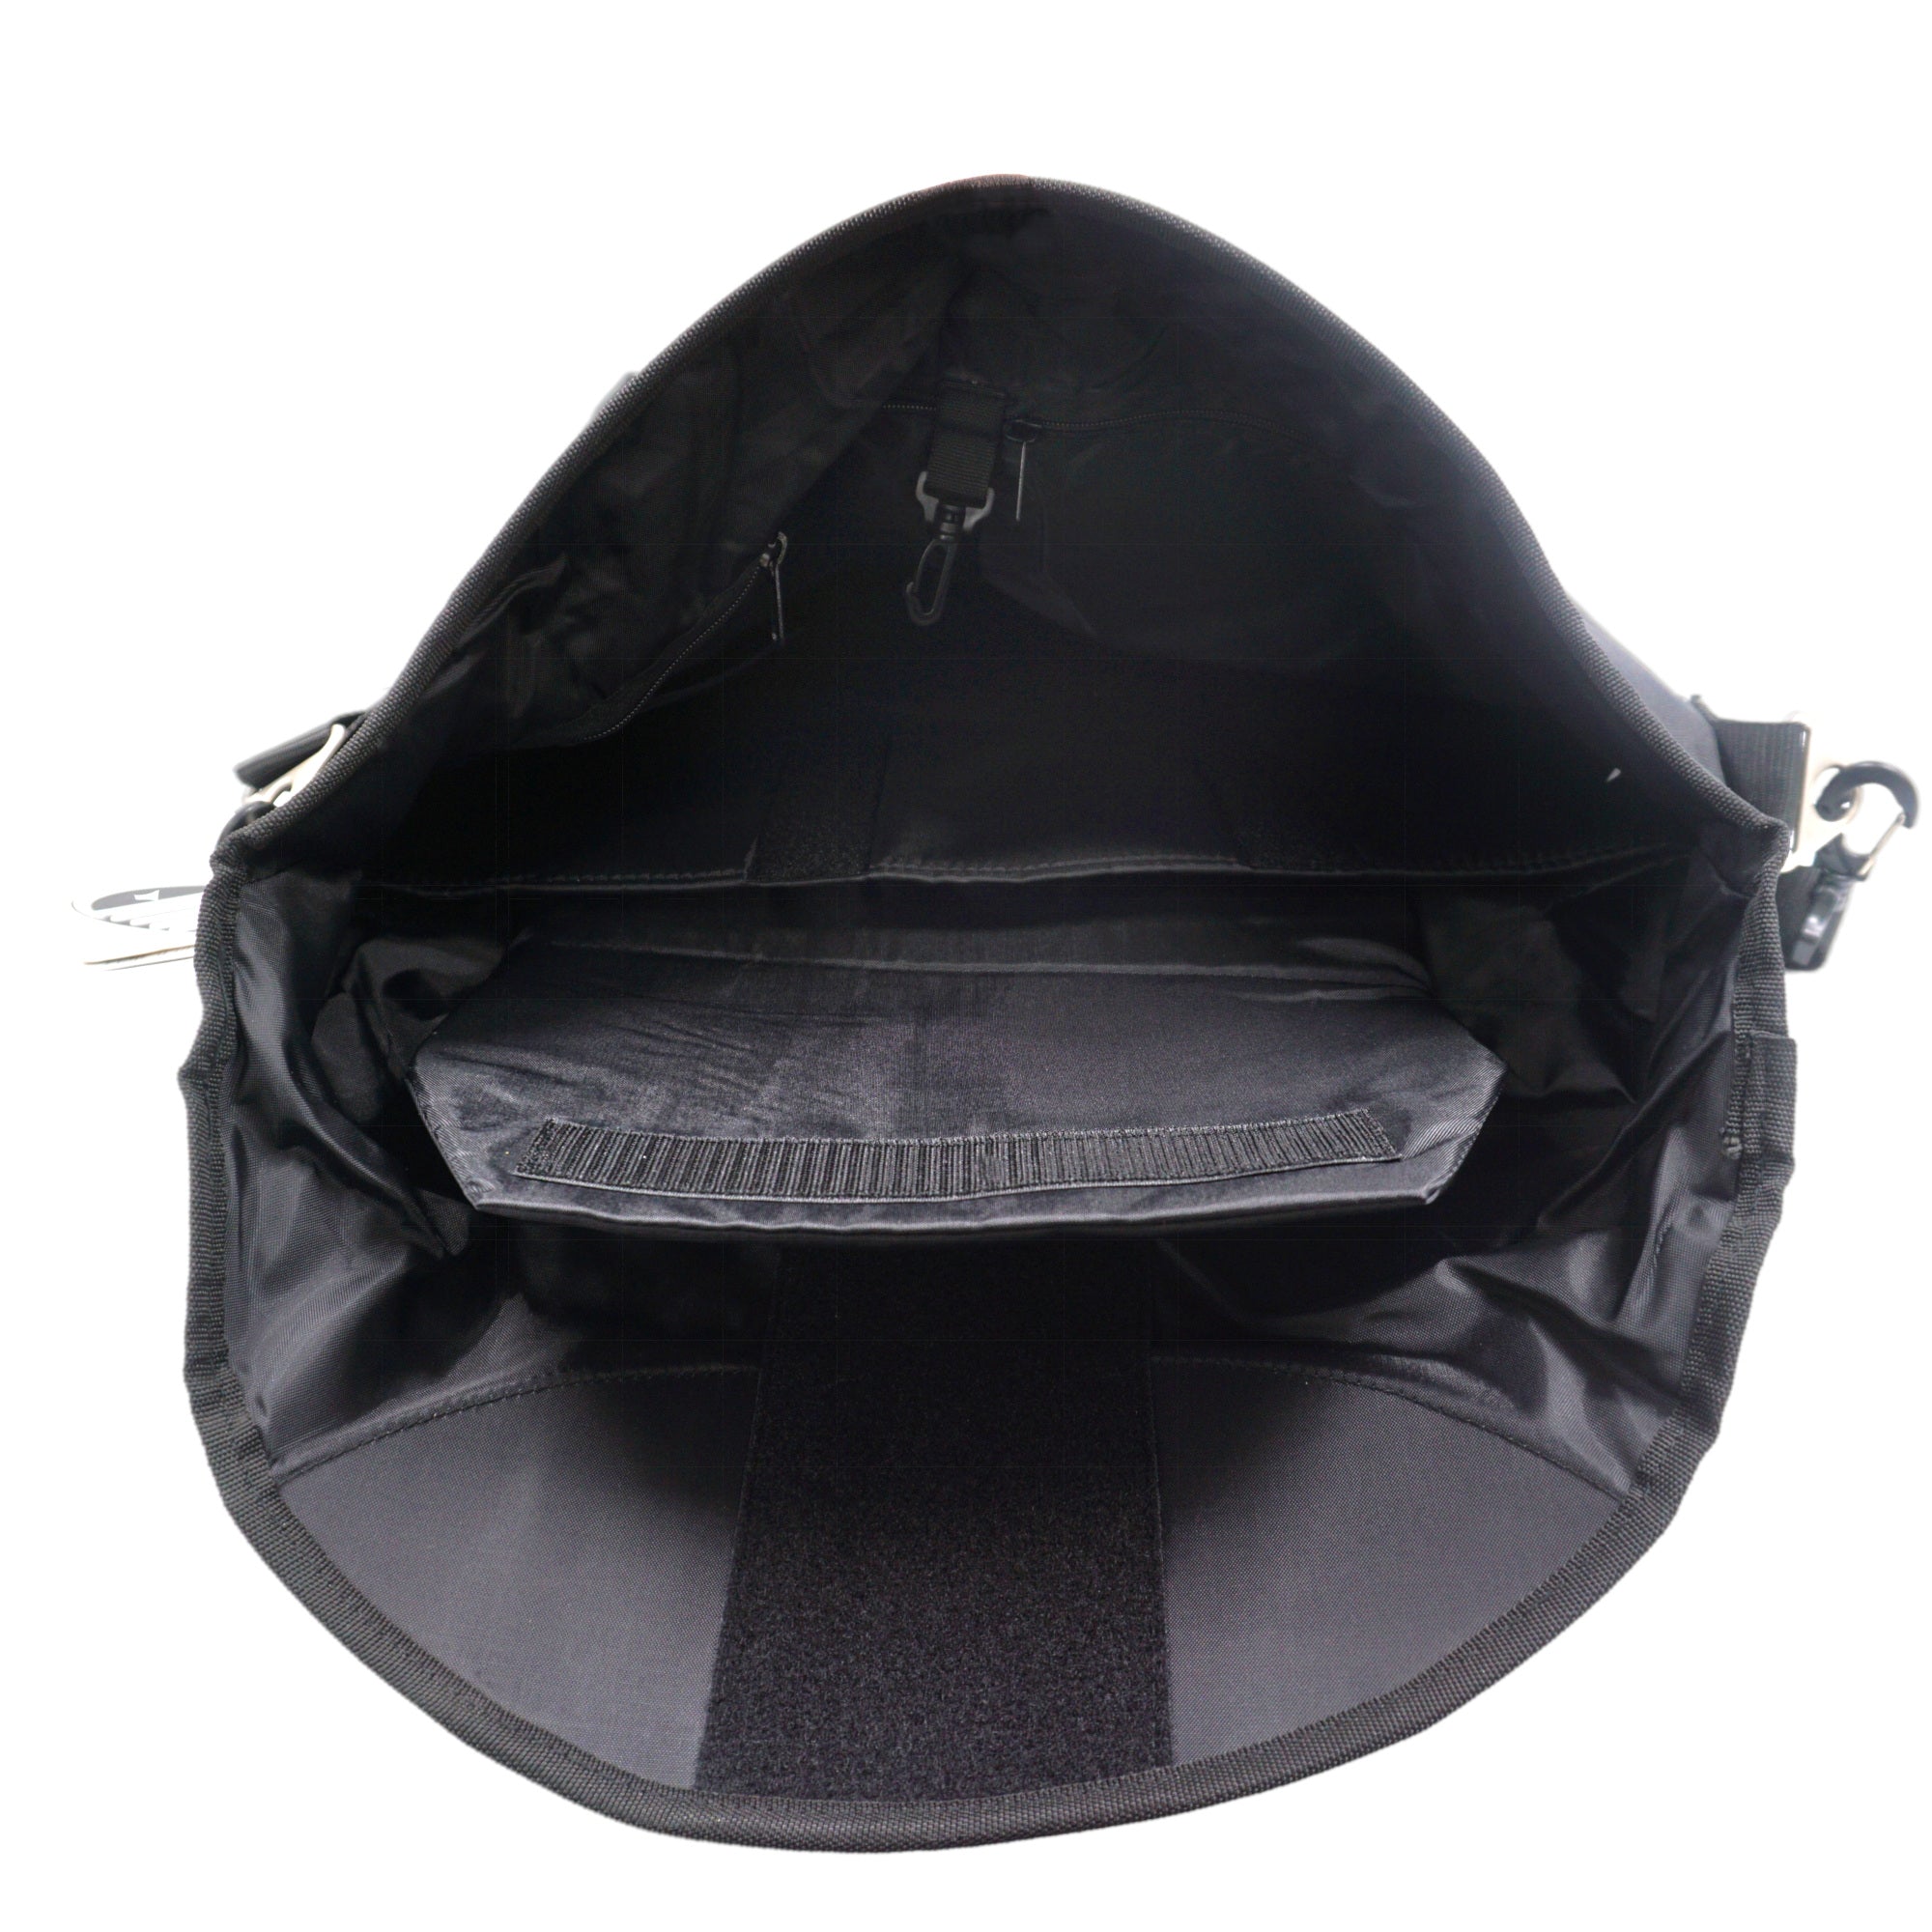 Sunlite Messenger Bag Black Gray Waterproof - The Bikesmiths